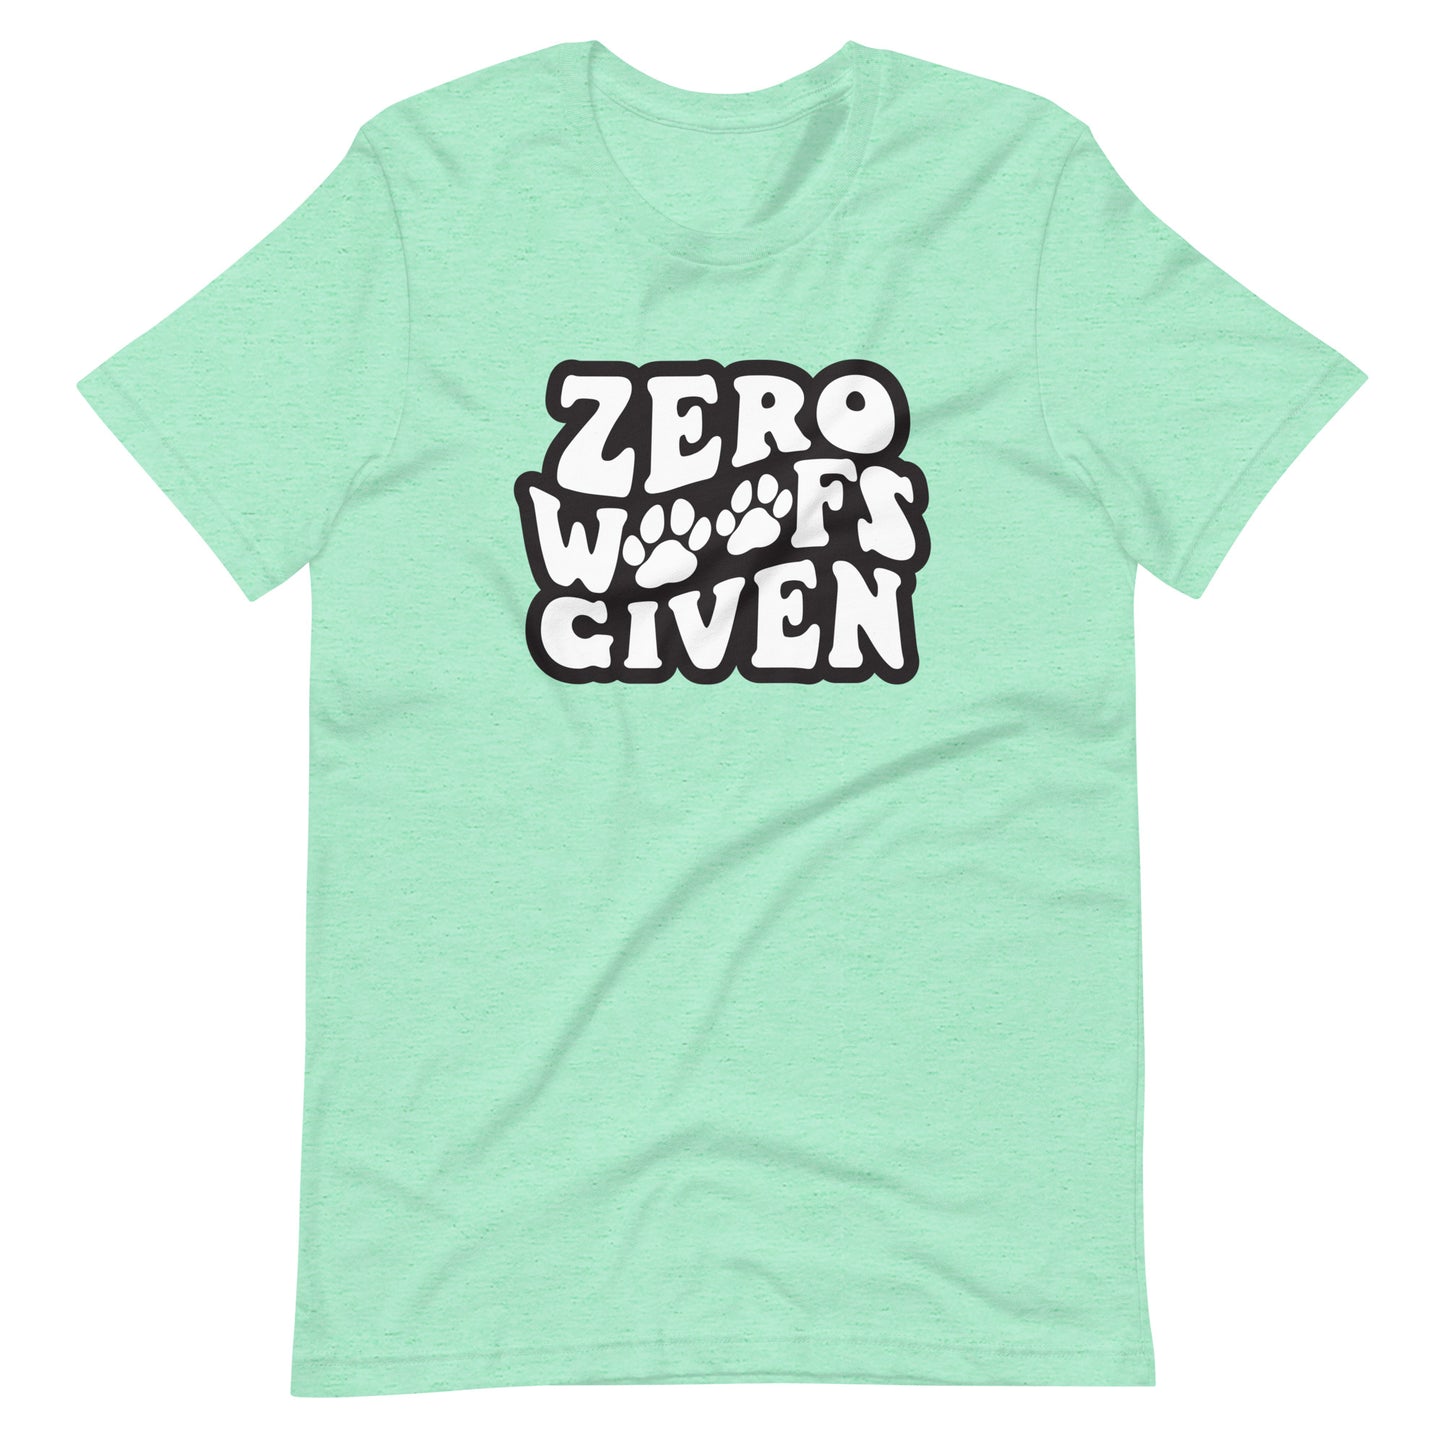 Zero Woofs Given T-Shirt